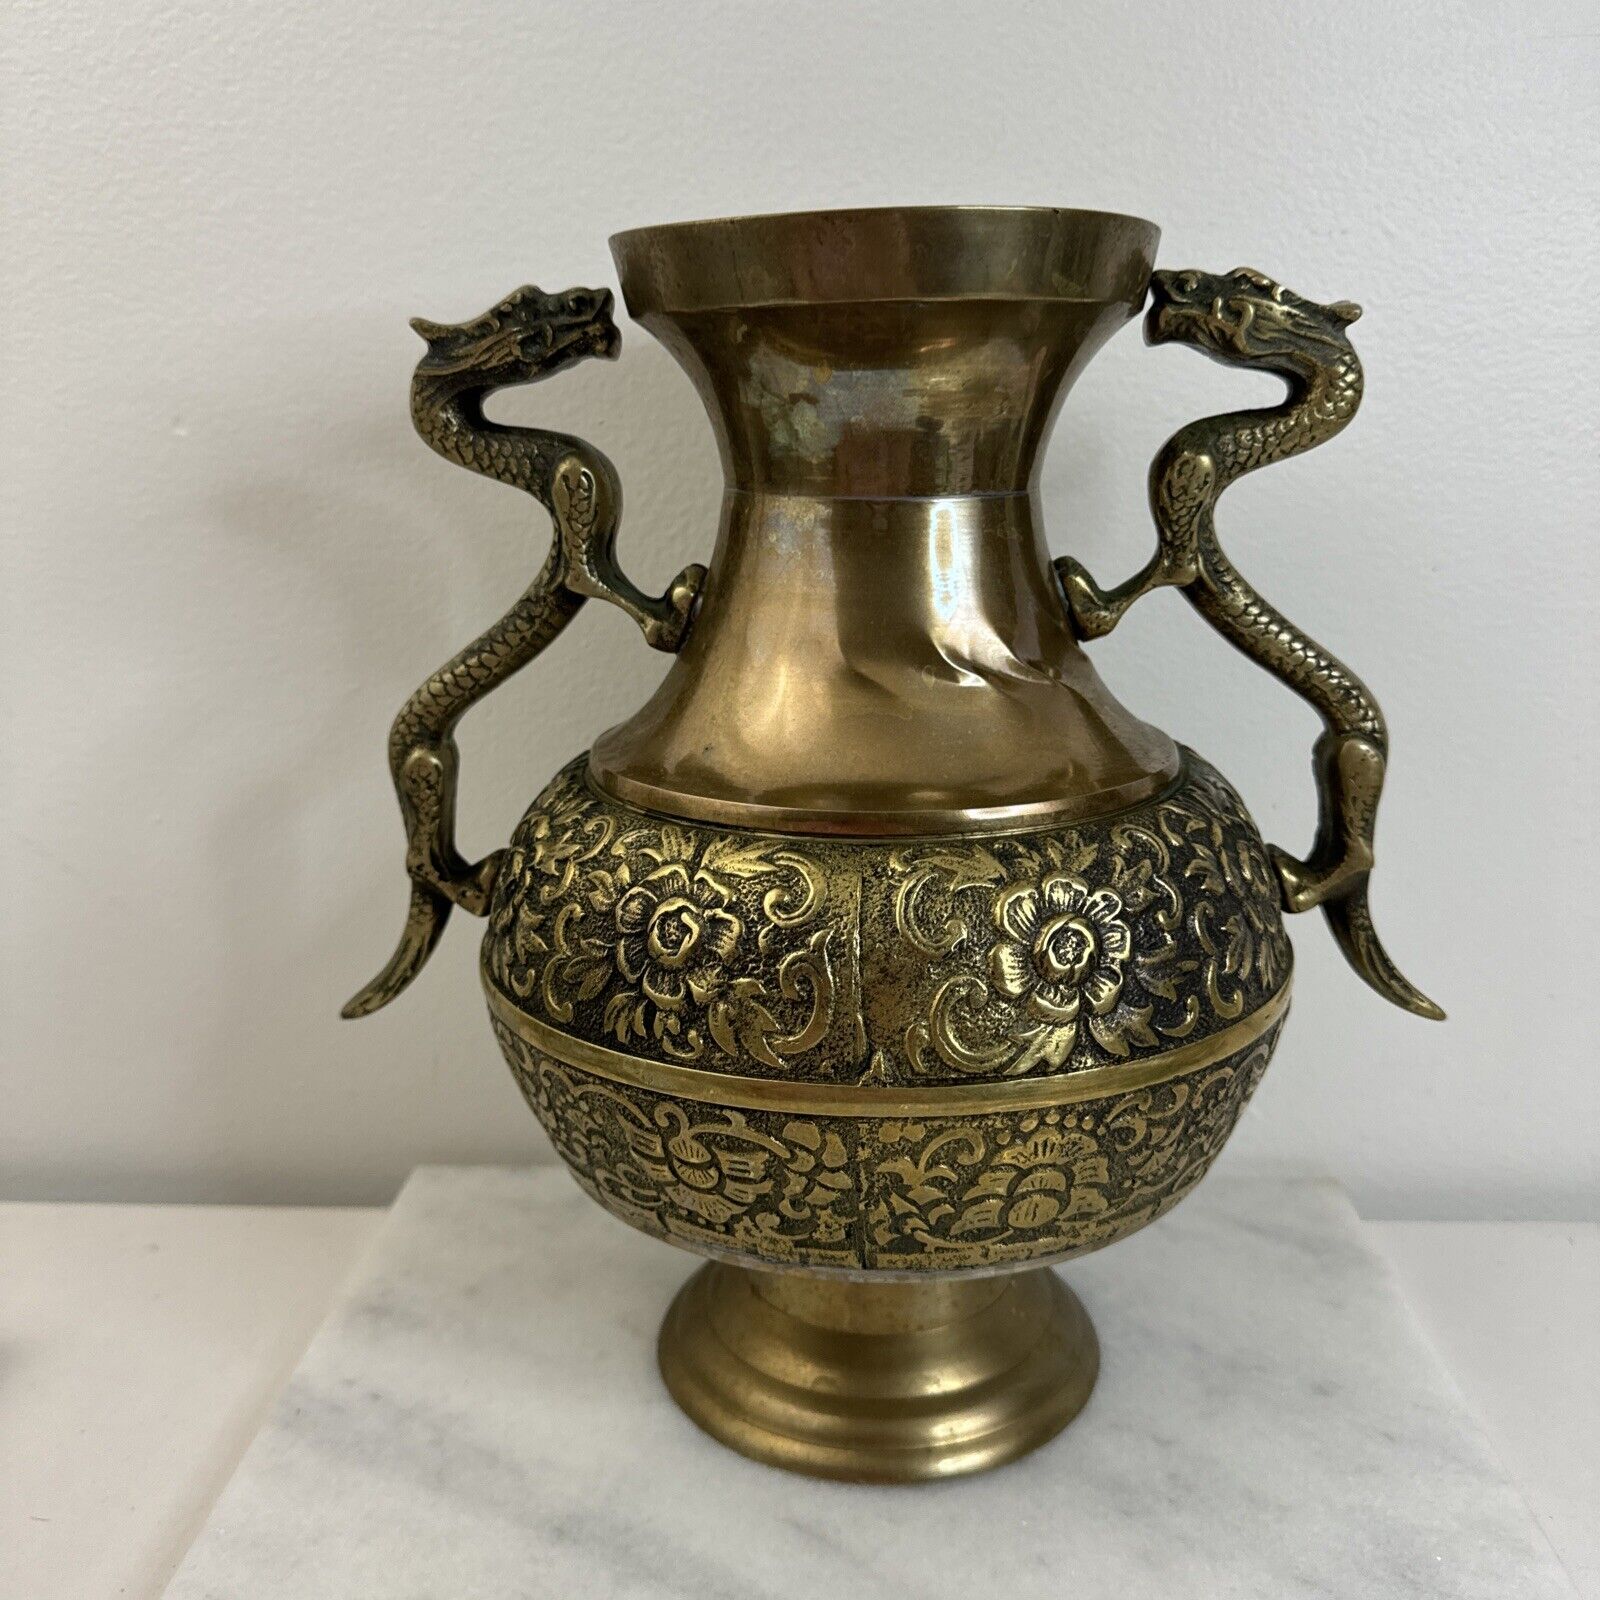 Vintage Chinese Solid Brass Dragon Urn Vase Planter with Floral Motif 11.5”